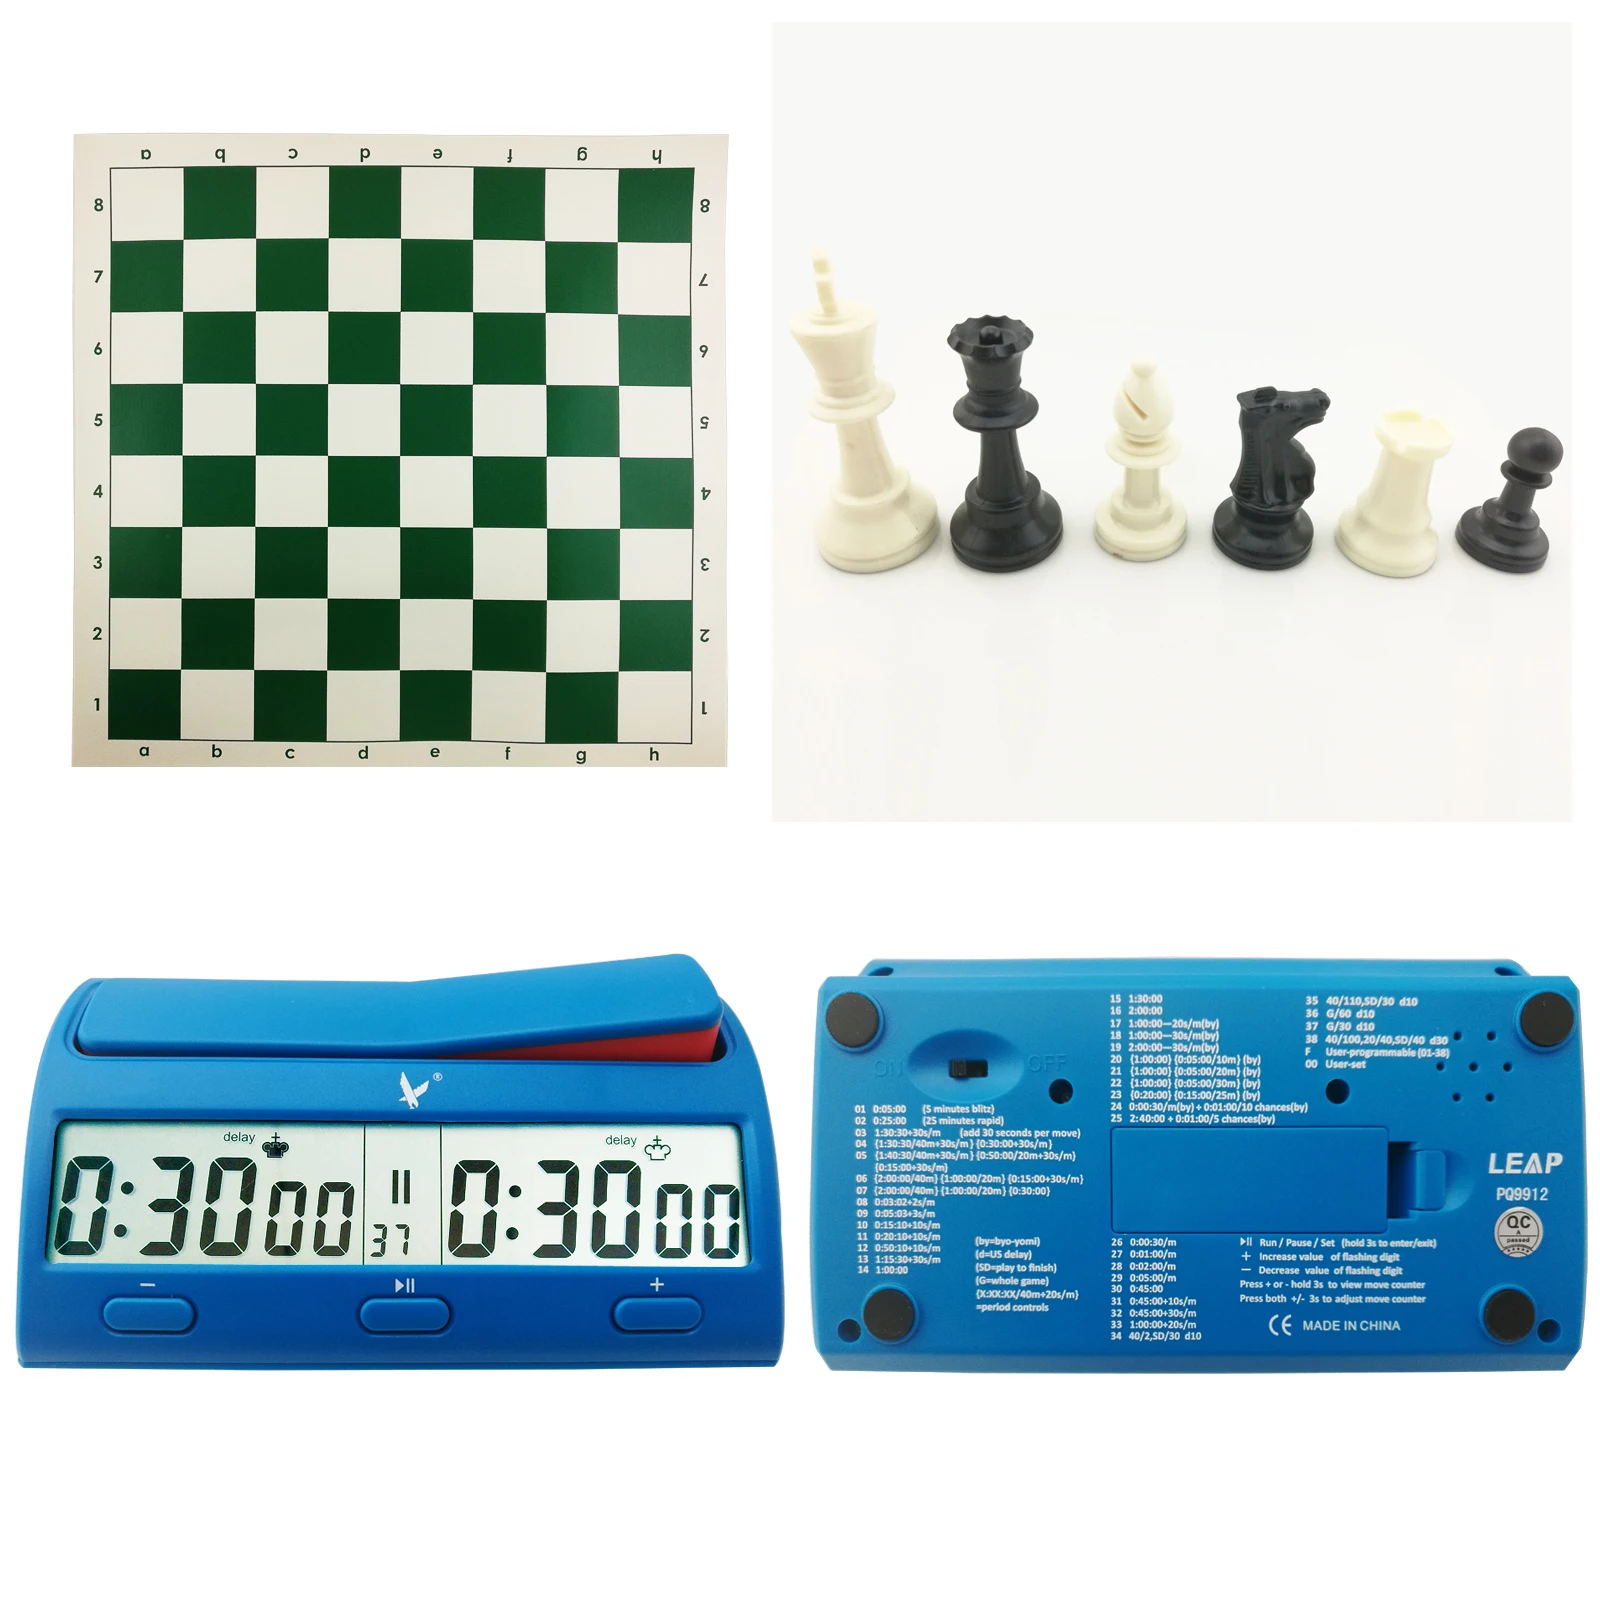 

Cheap high quality desk chess timer clock, Blue